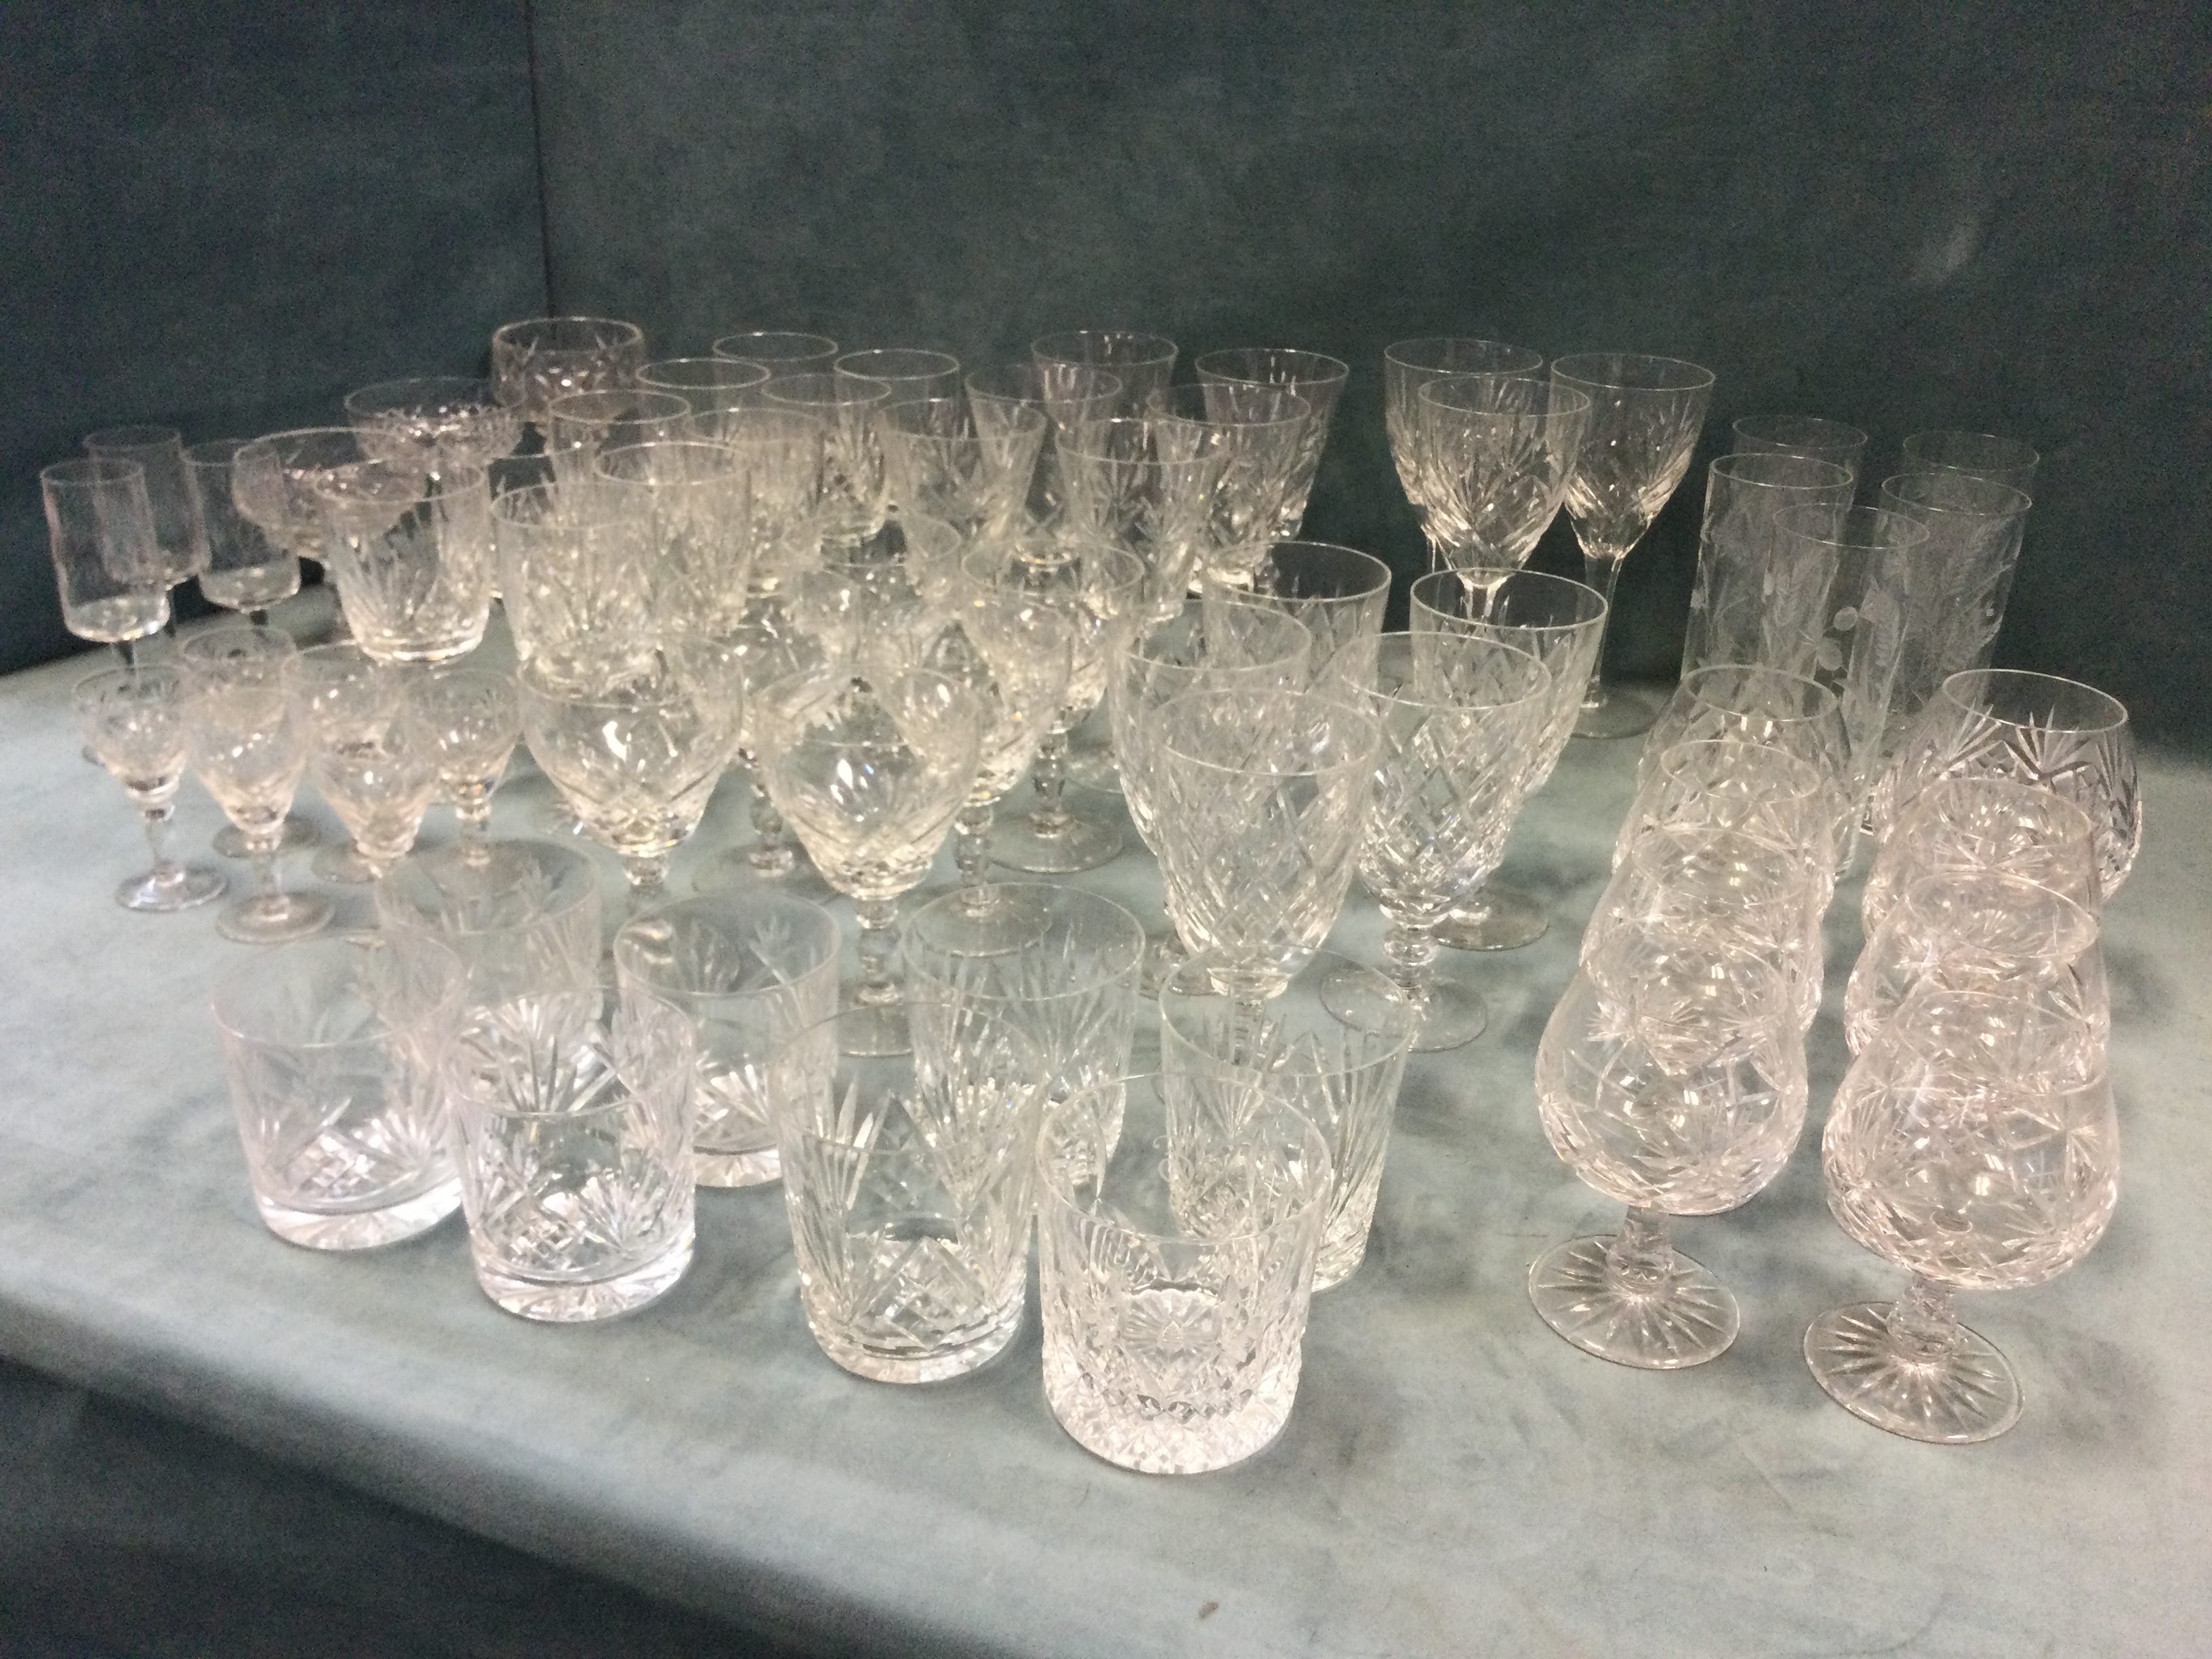 A quantity of drinking glasses - Edinburgh cut crystal, tumblers, wine glasses, brandy balloons,